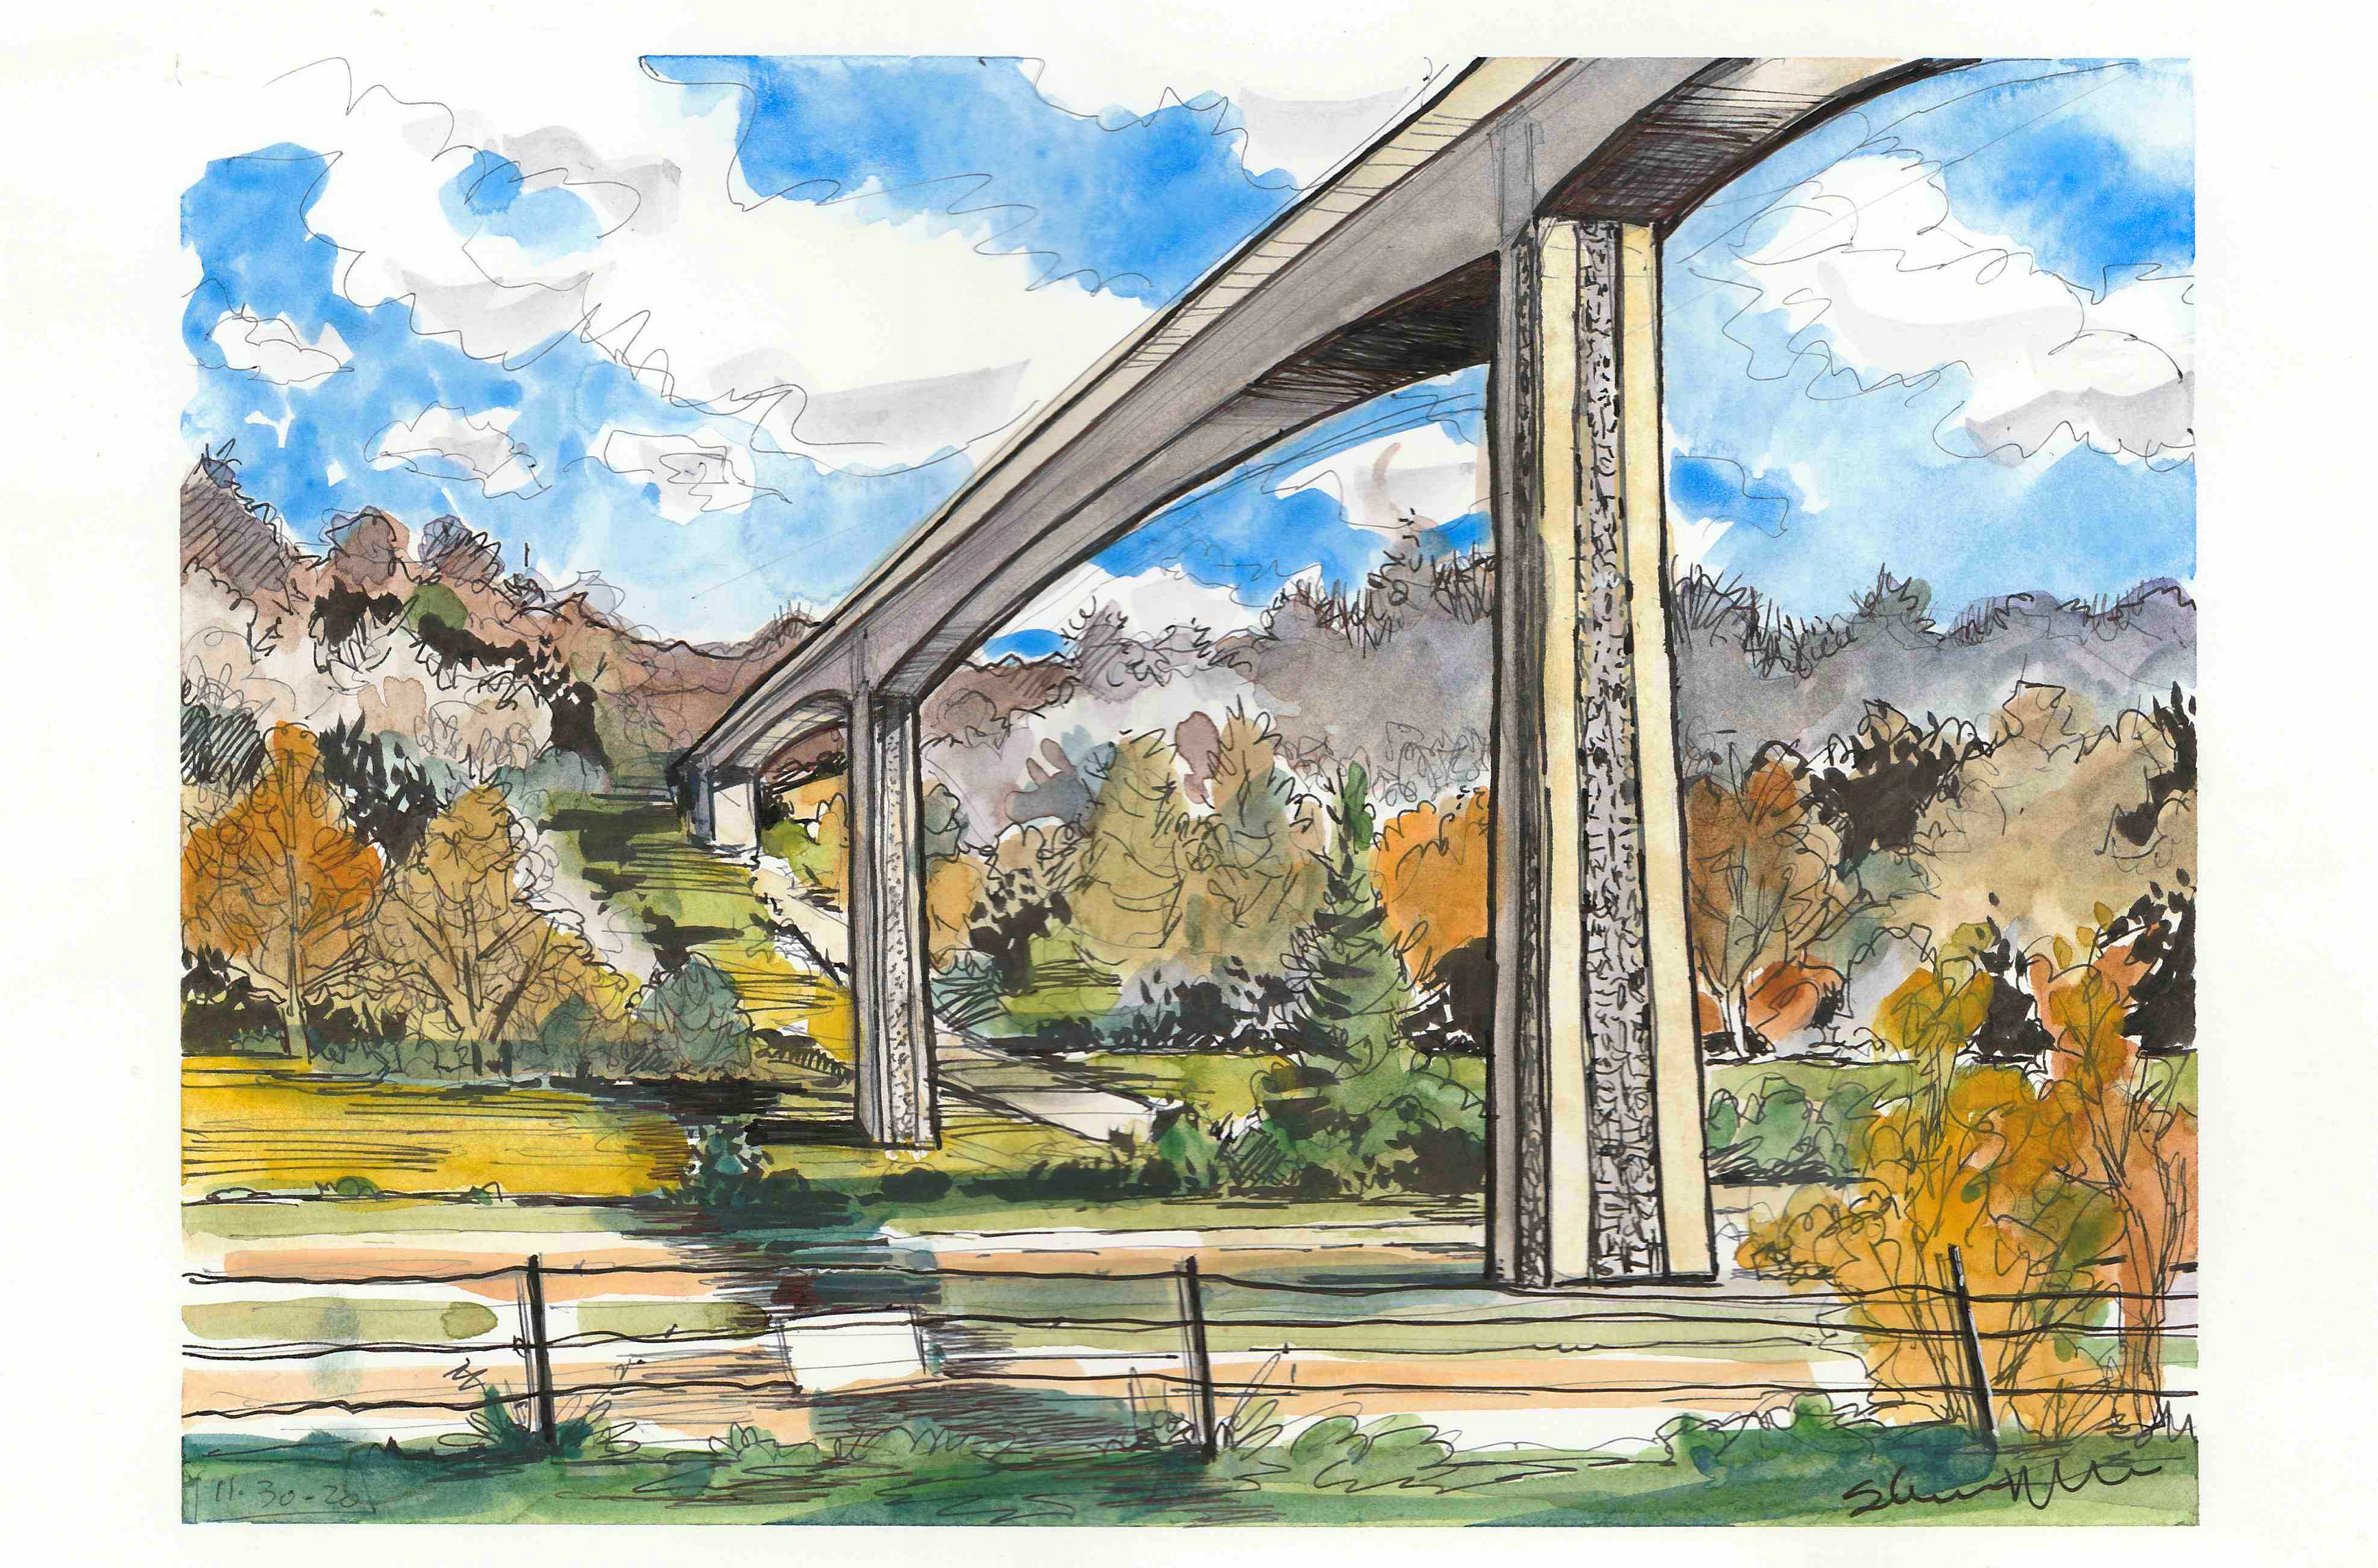 VTTI's Smart Road Bridge - Appeared on Dec. 1, 2020